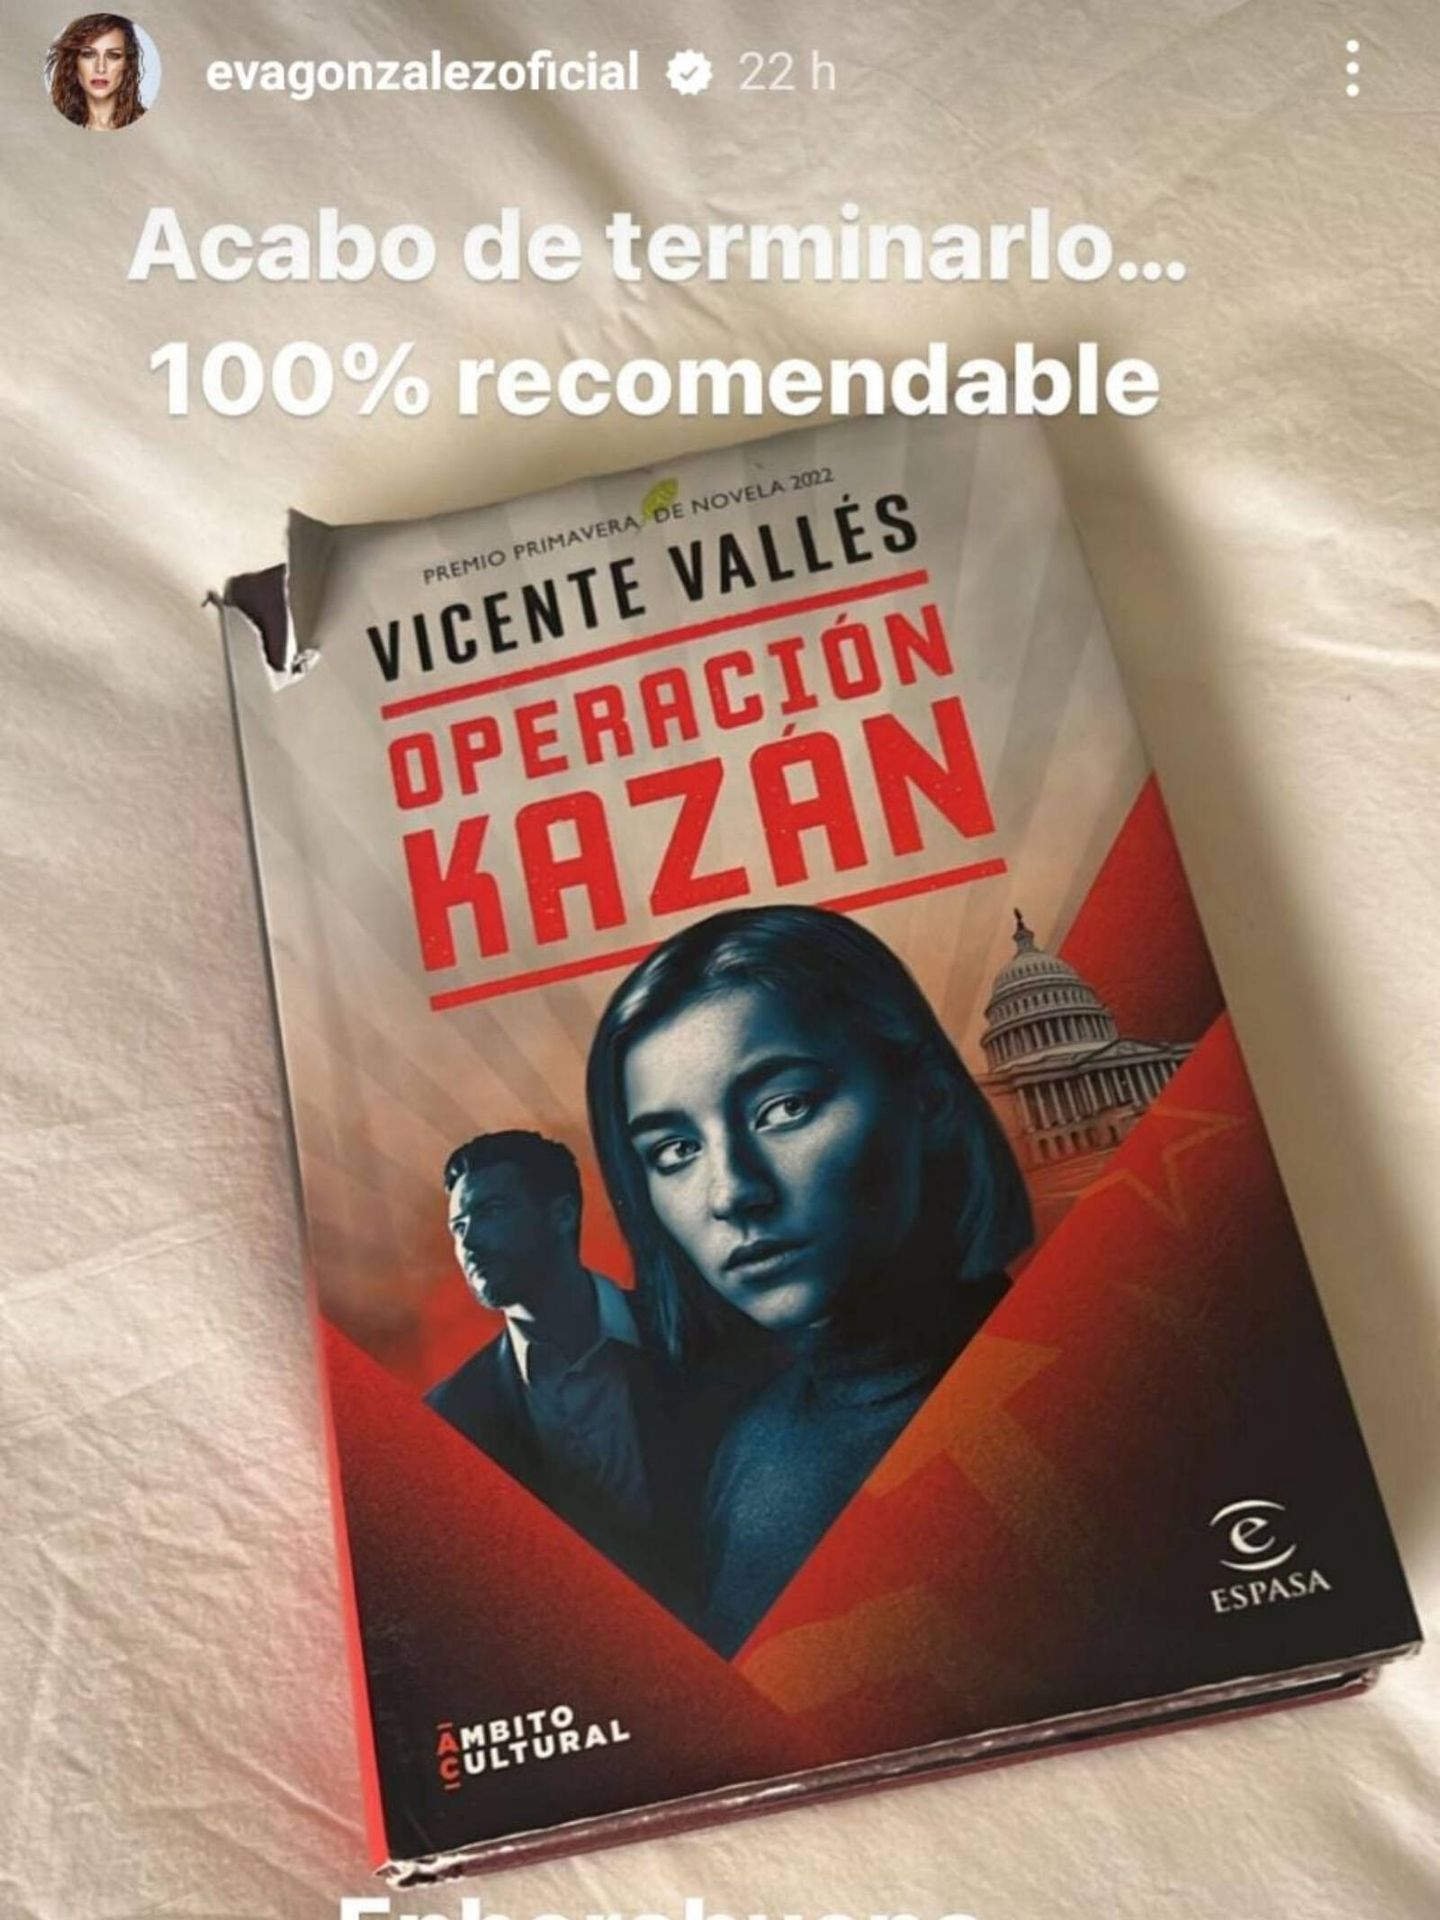 Eva González recomienda la obra de Vicente Vallés al 100%. (Instagram/@evagonzalezoficial)